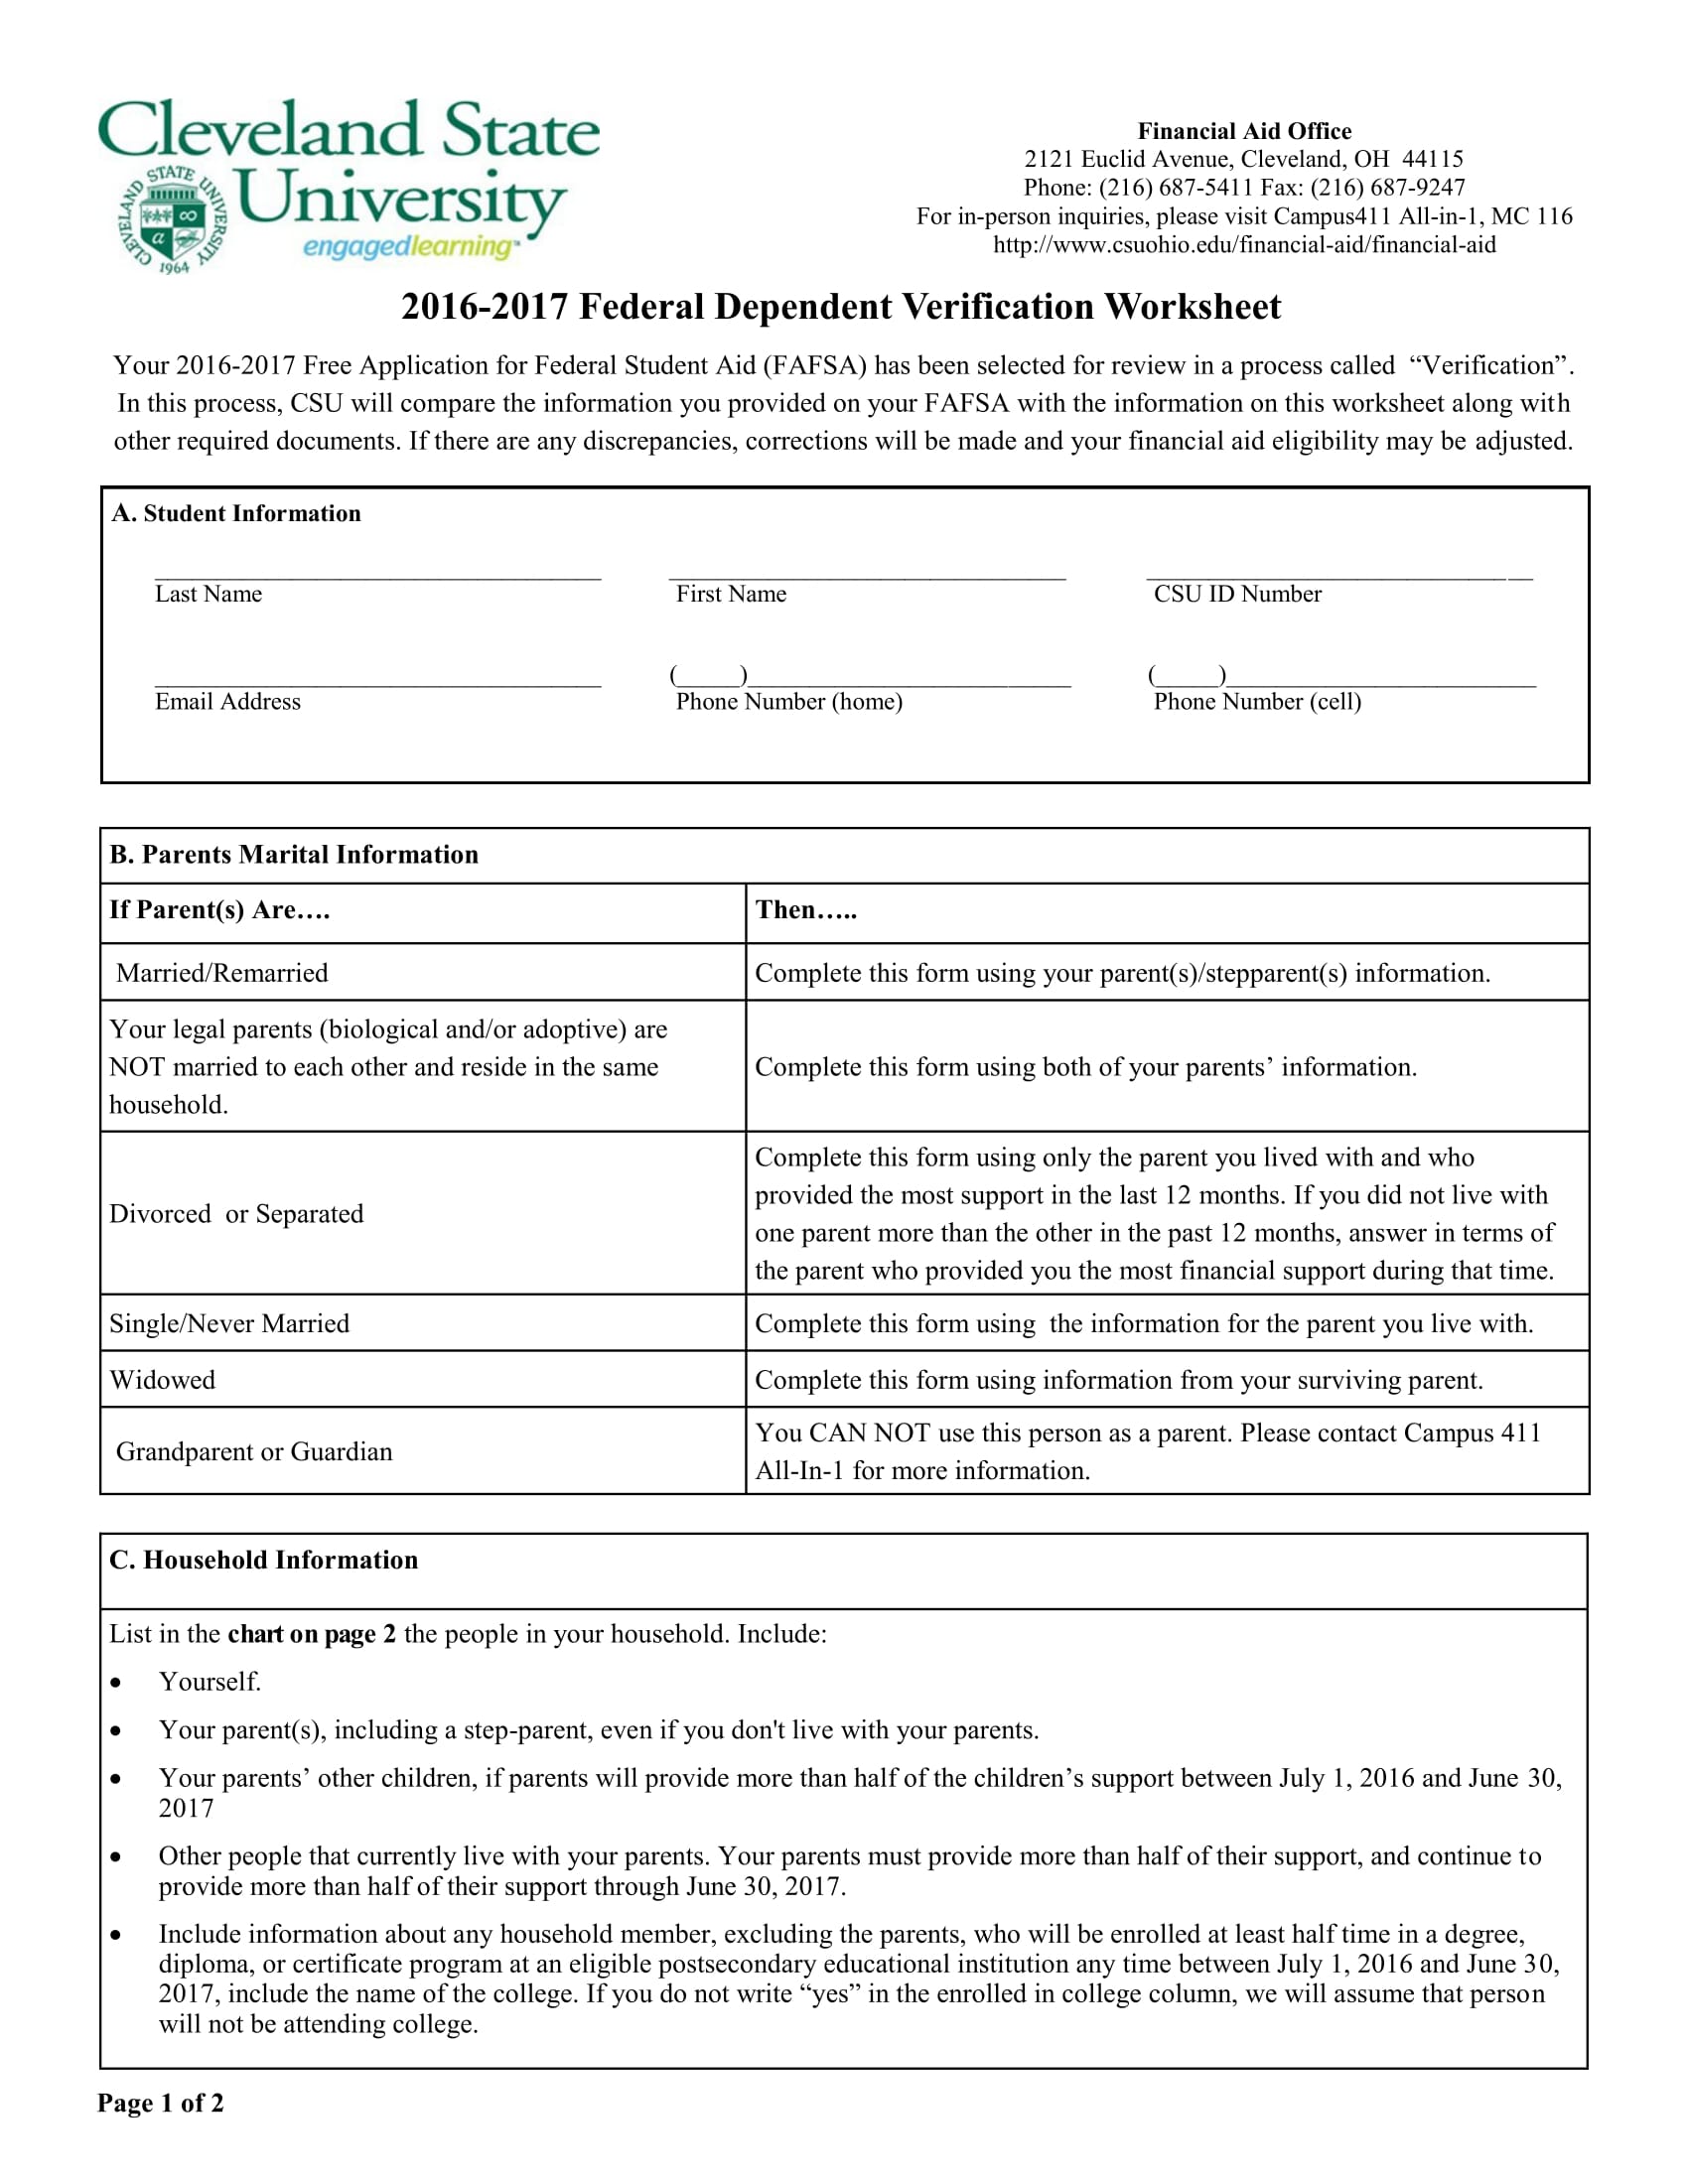 federal dependent verification form 1